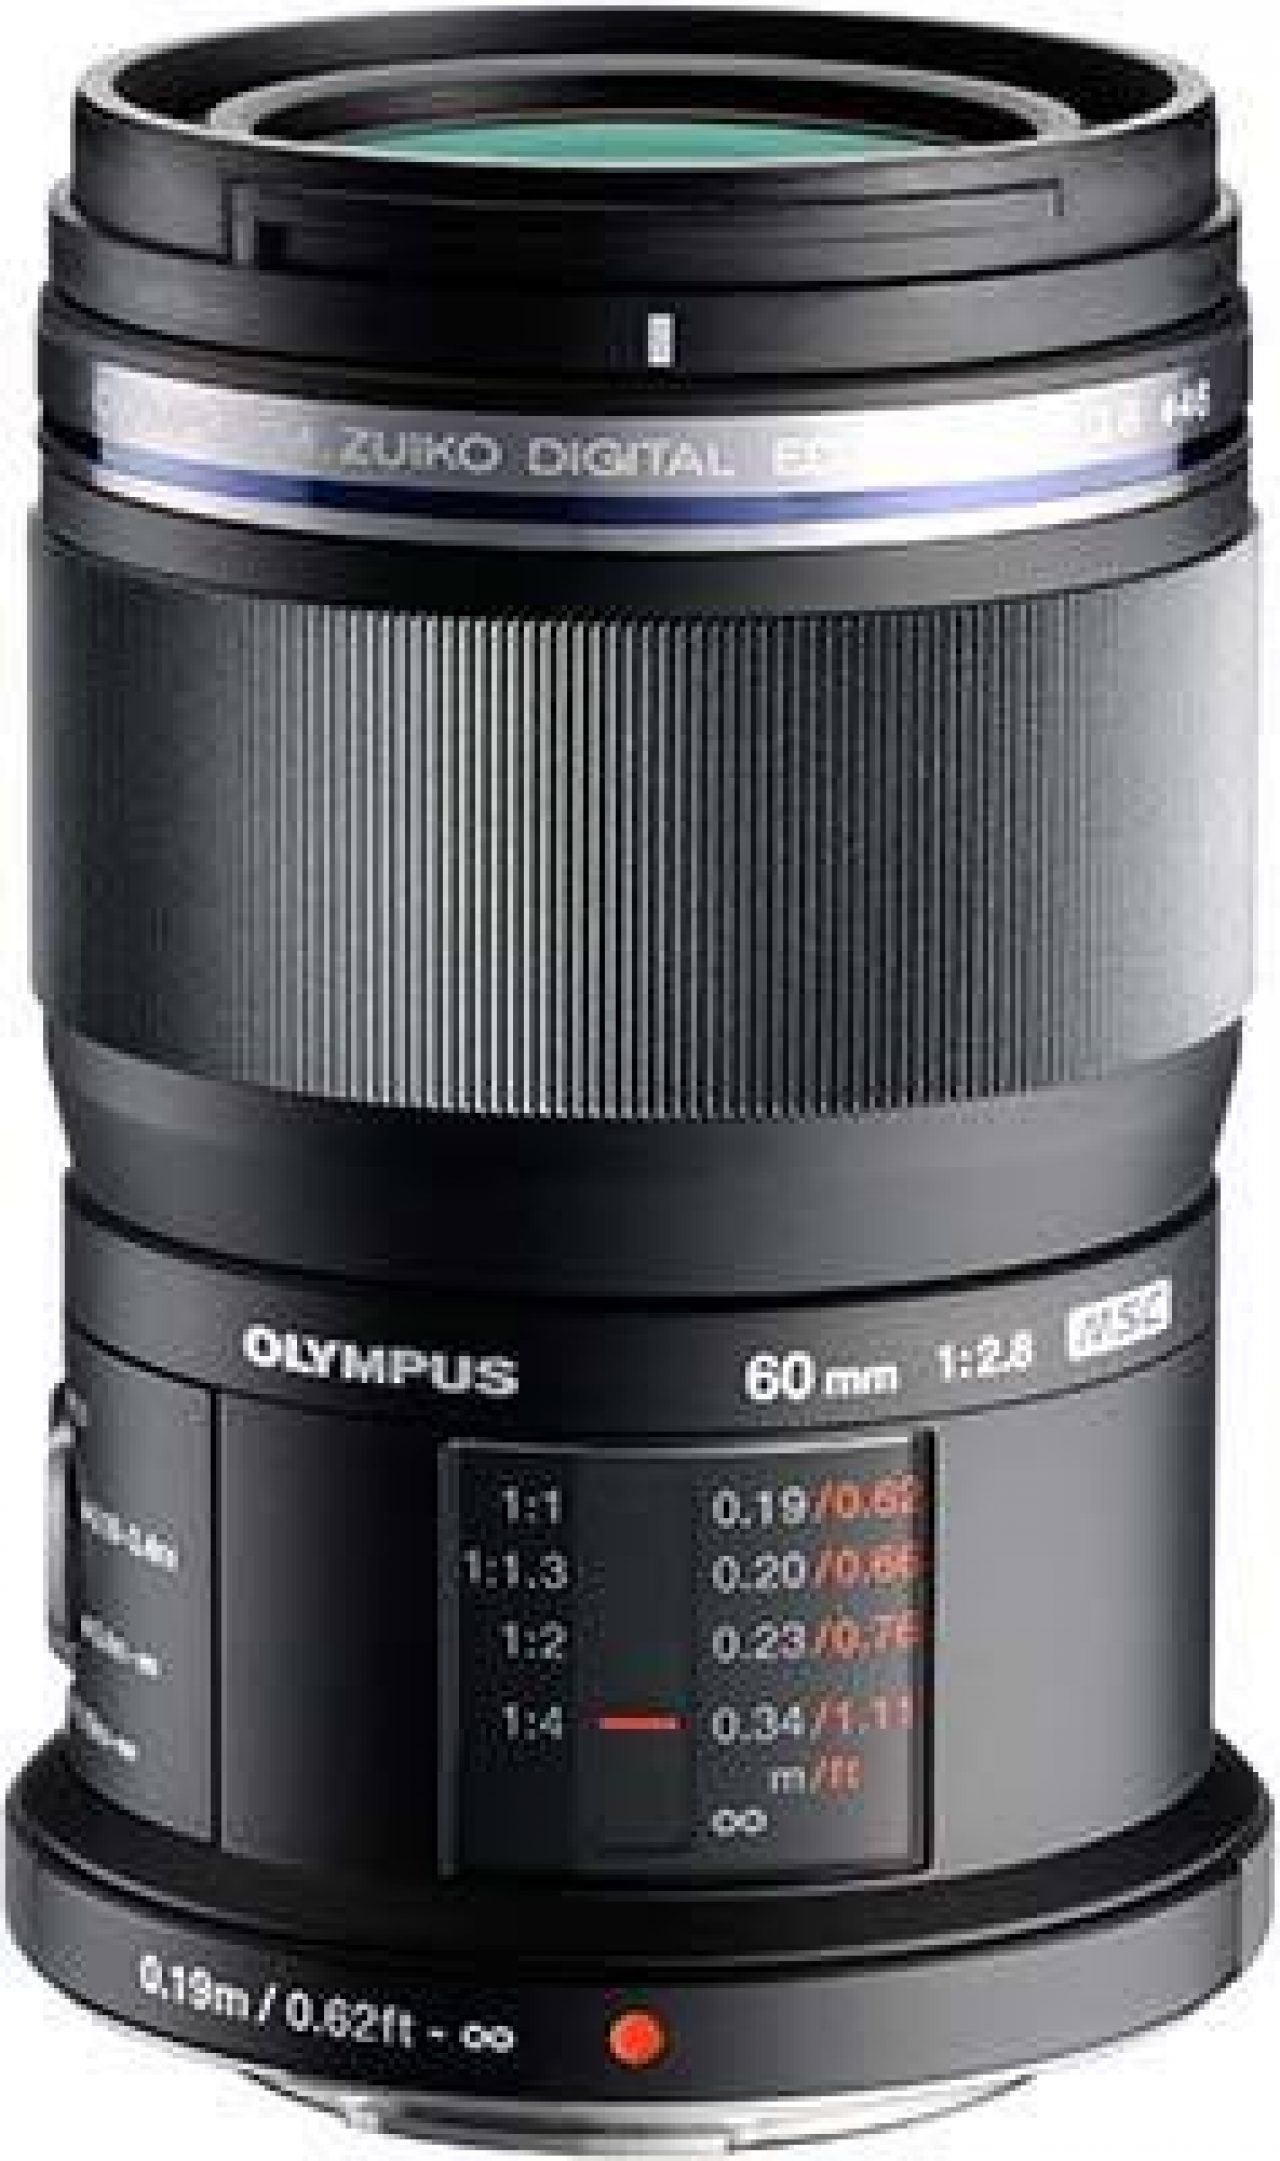 Olympus M.Zuiko Digital ED 60mm f/2.8 Macro Review | Photography Blog